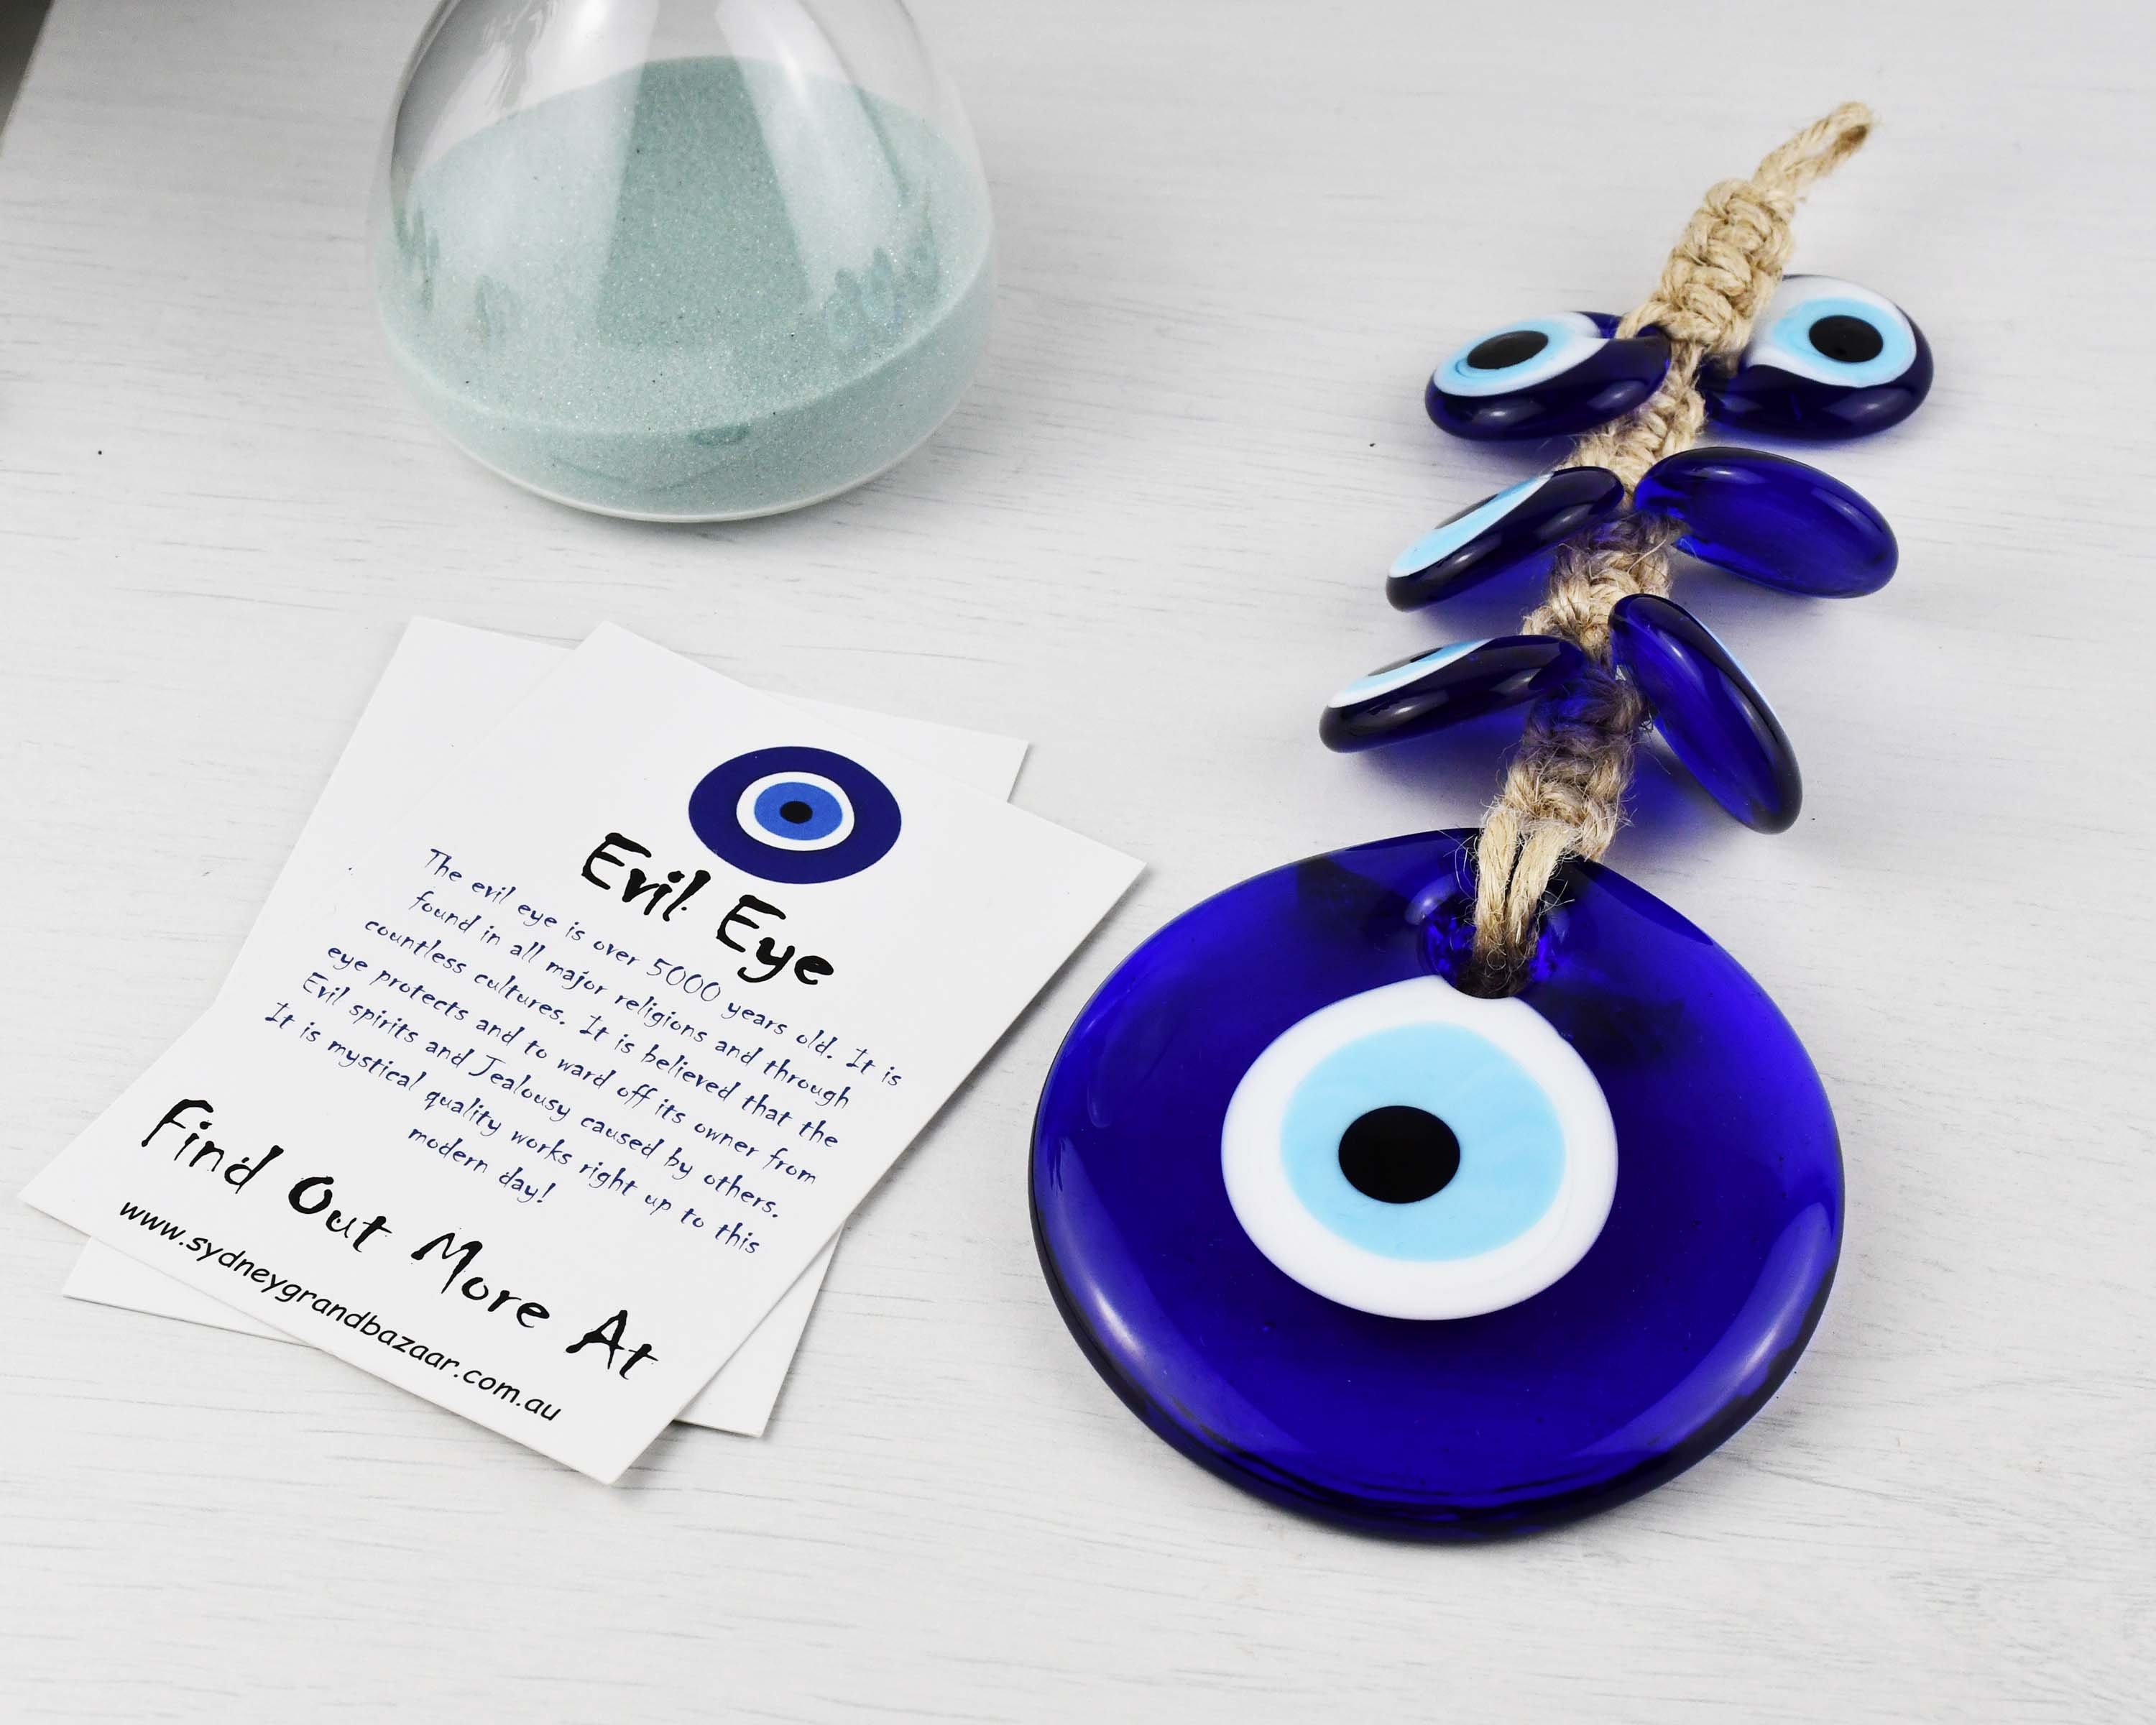 Turkish Evil Eye Glass Greek Mati Eye Nazar Amulet Protection Good Luck  100% Authentic Handmade Home Decor Car Hanging -  Denmark